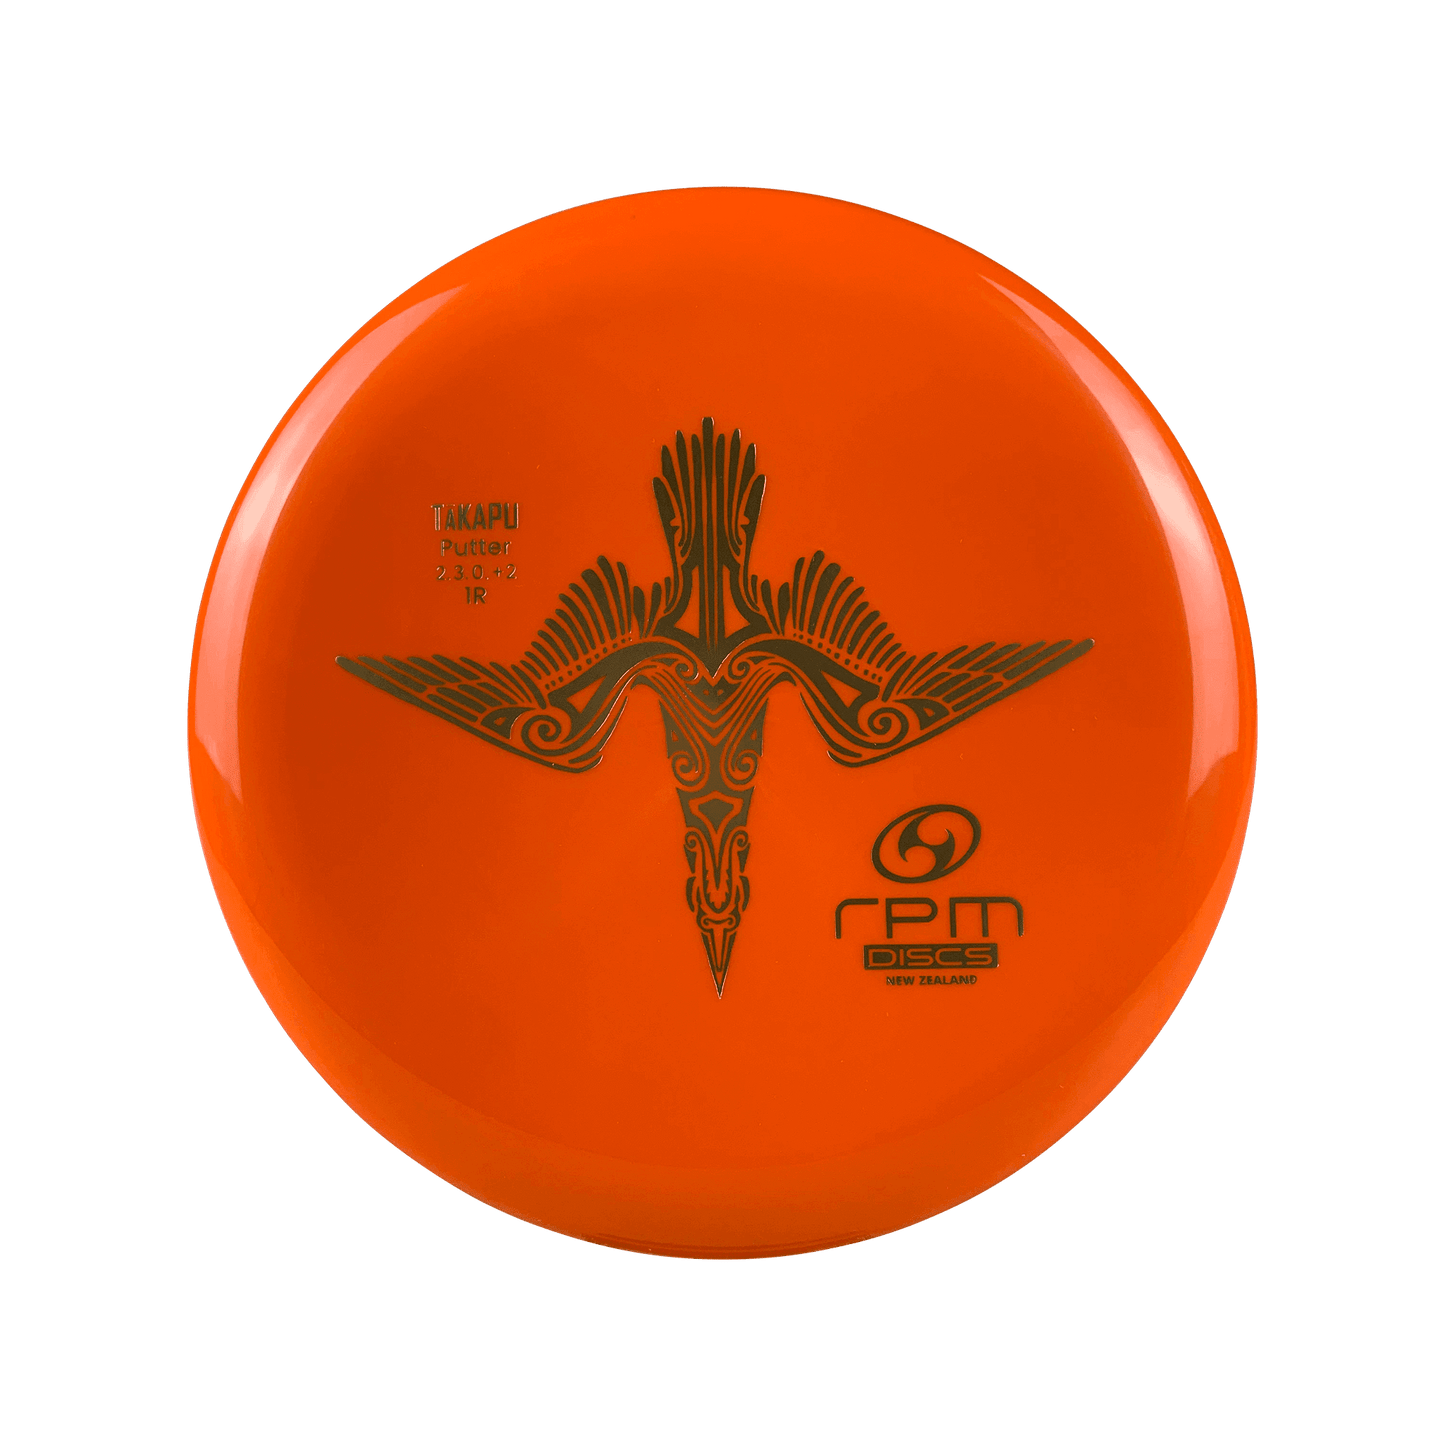 Atomic Takapu - First Run Disc RPM Discs orange 171 